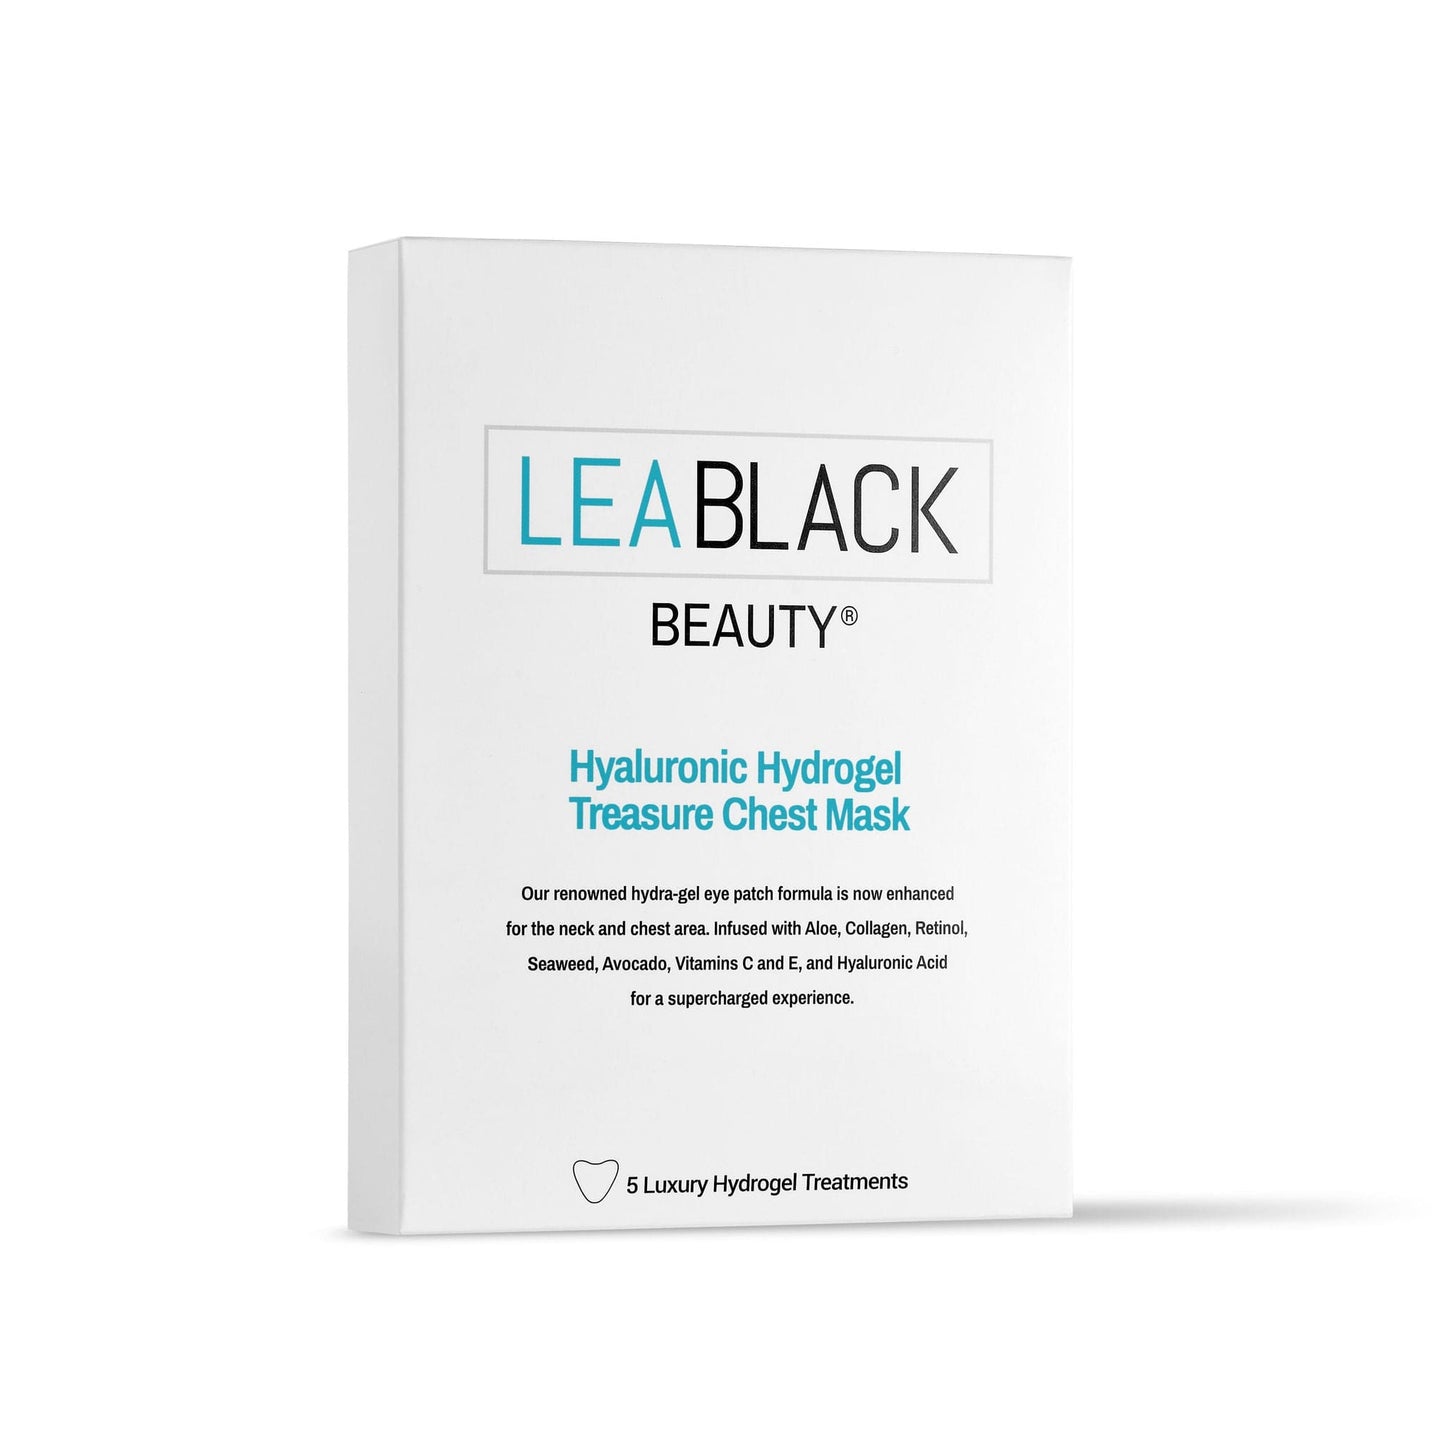 Lea Black Beauty® Hyaluronic Hydrogel Treasure Chest Pads